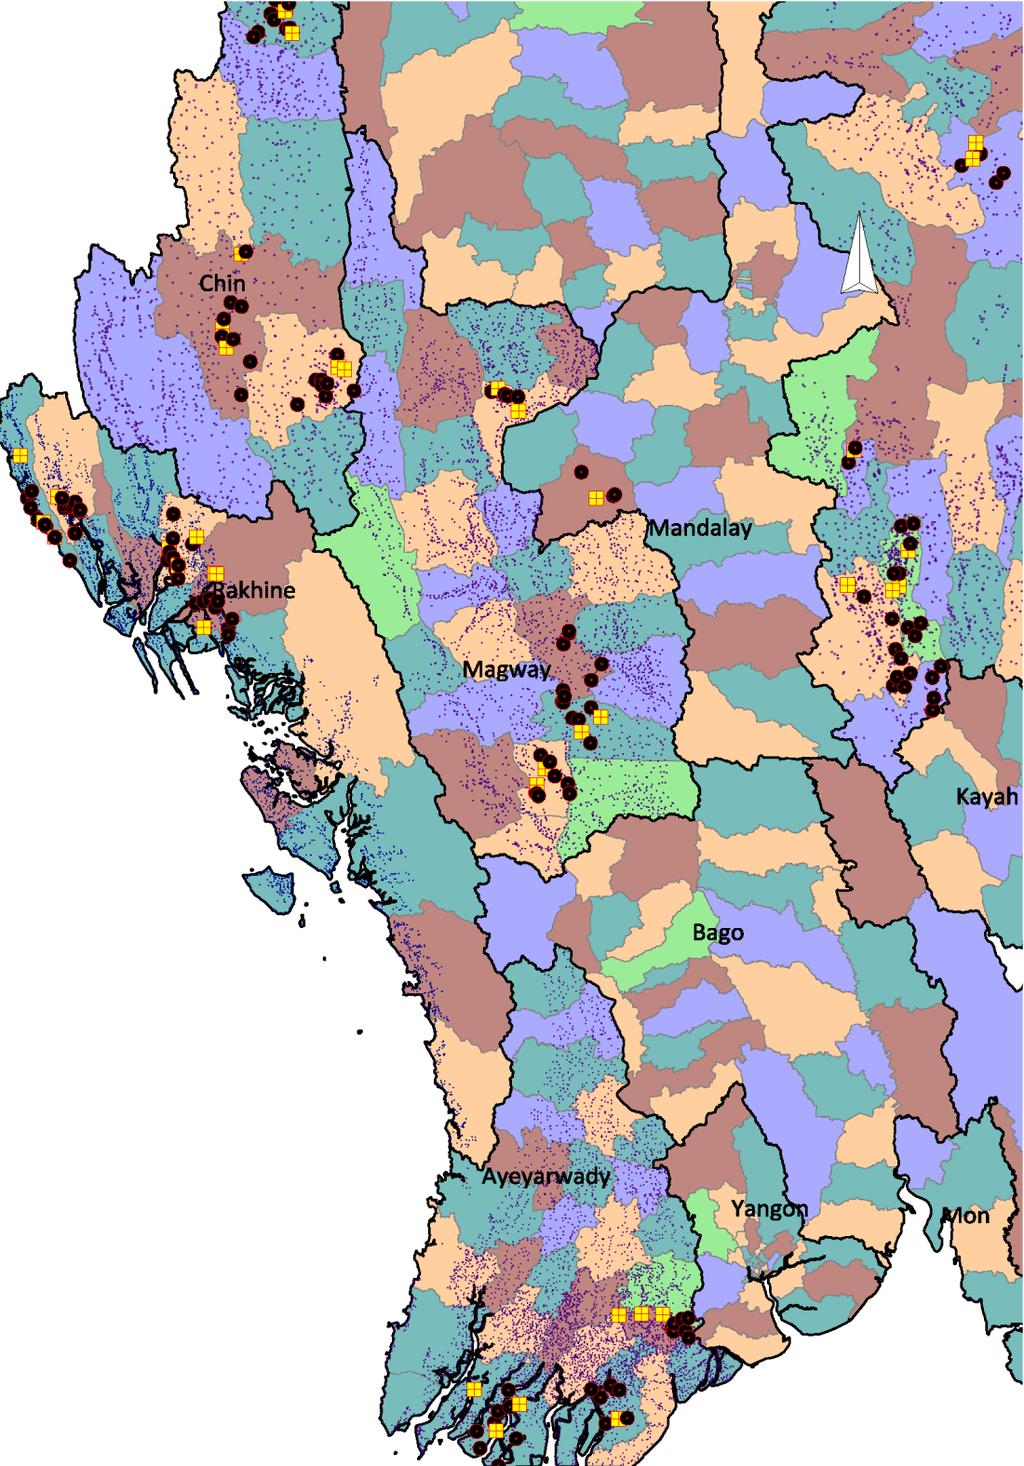 Black dots: HDI sample villages,